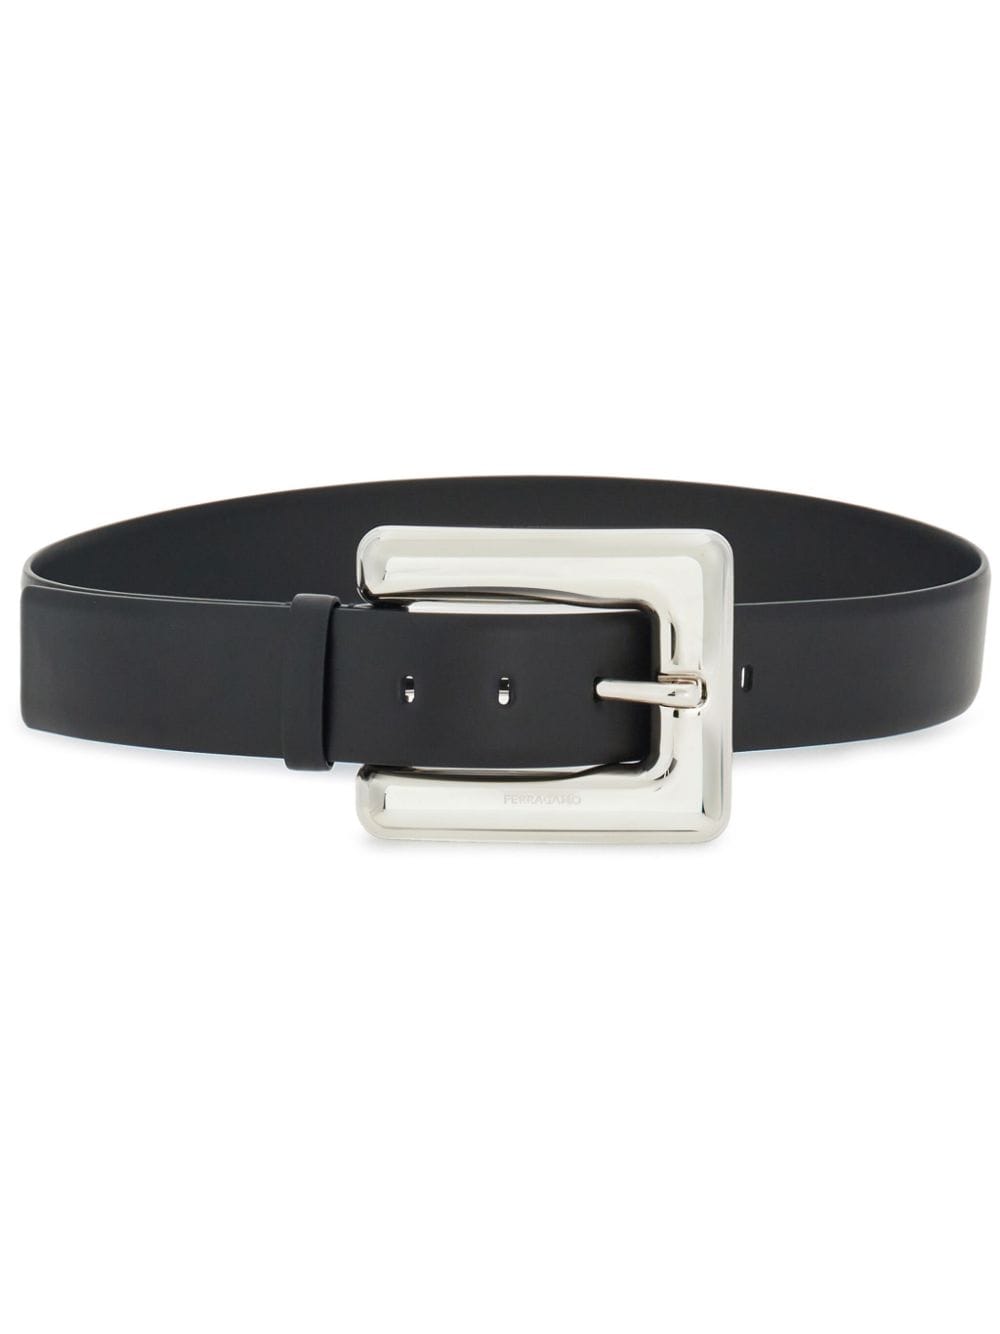 Ferragamo buckle leather belt - Black